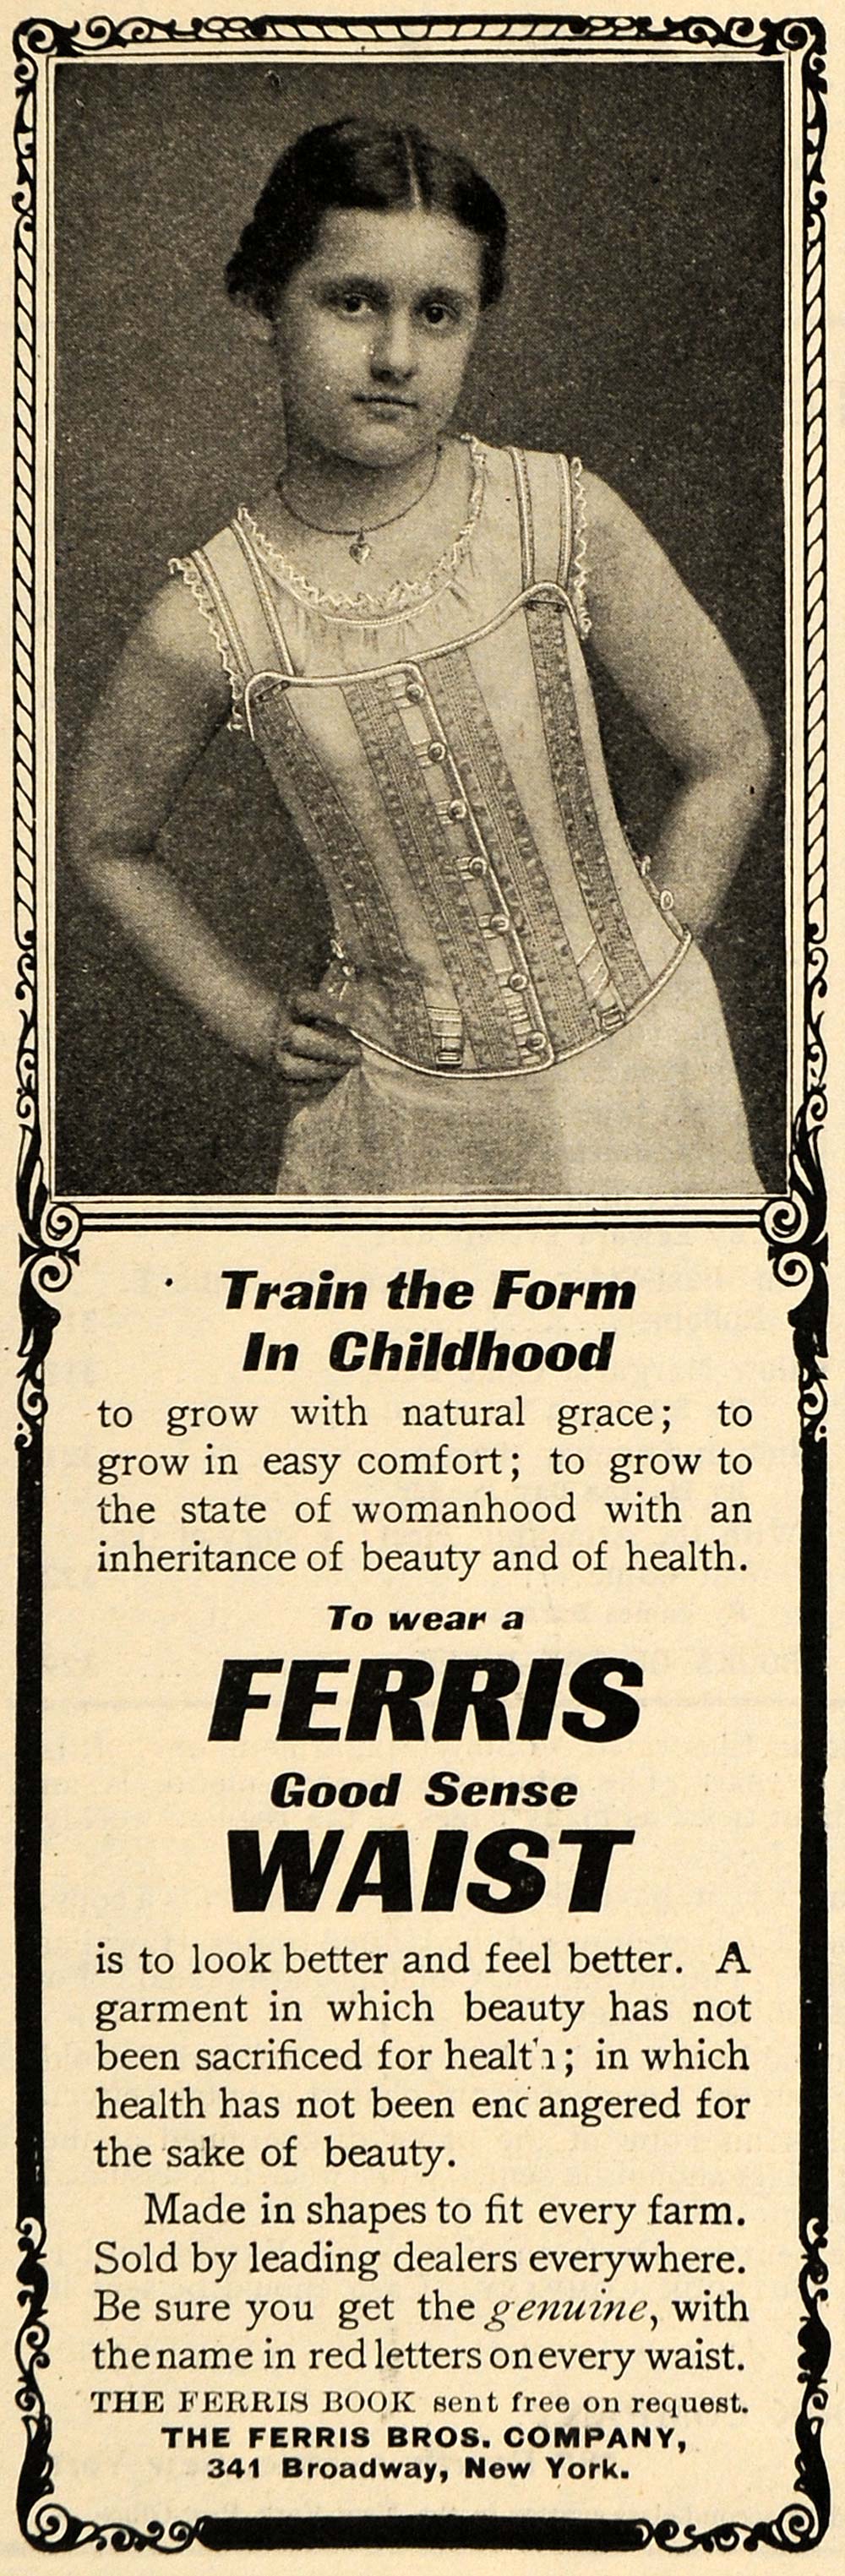 1902 Ad Ferris Bros Co. Good Sense Waist Corset Child - ORIGINAL TOM3